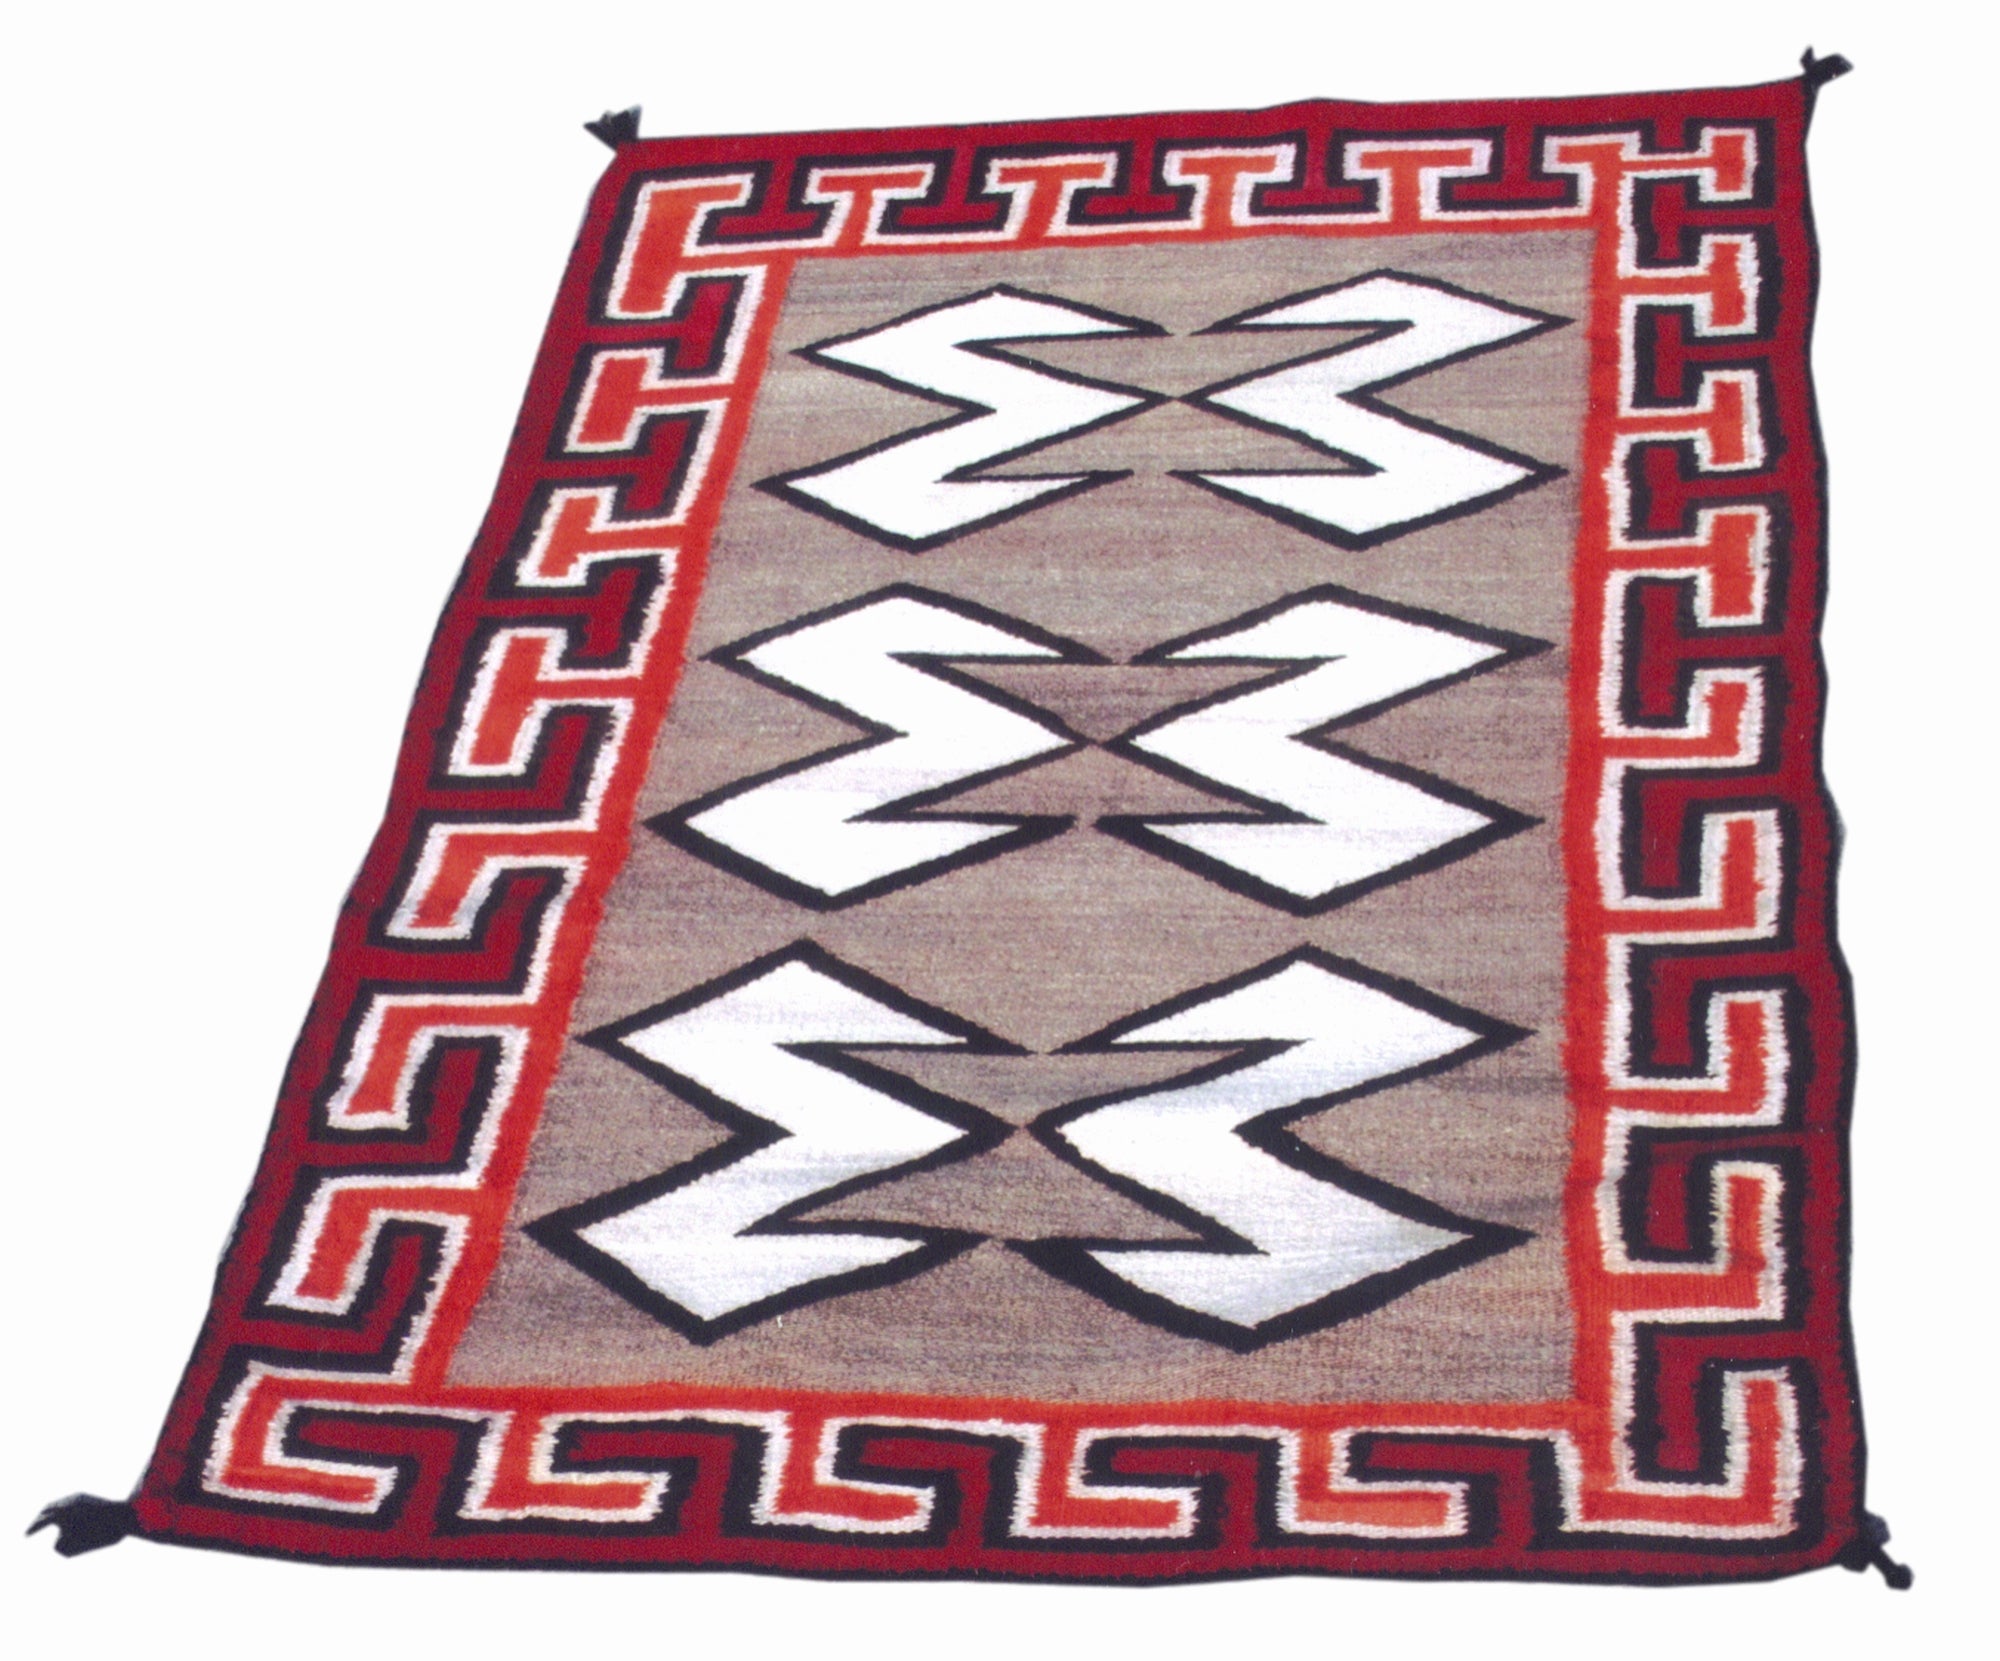 Navajo Teec Nos Pos Double Sunday Saddle, Native, Weaving, Double Saddle Blanket